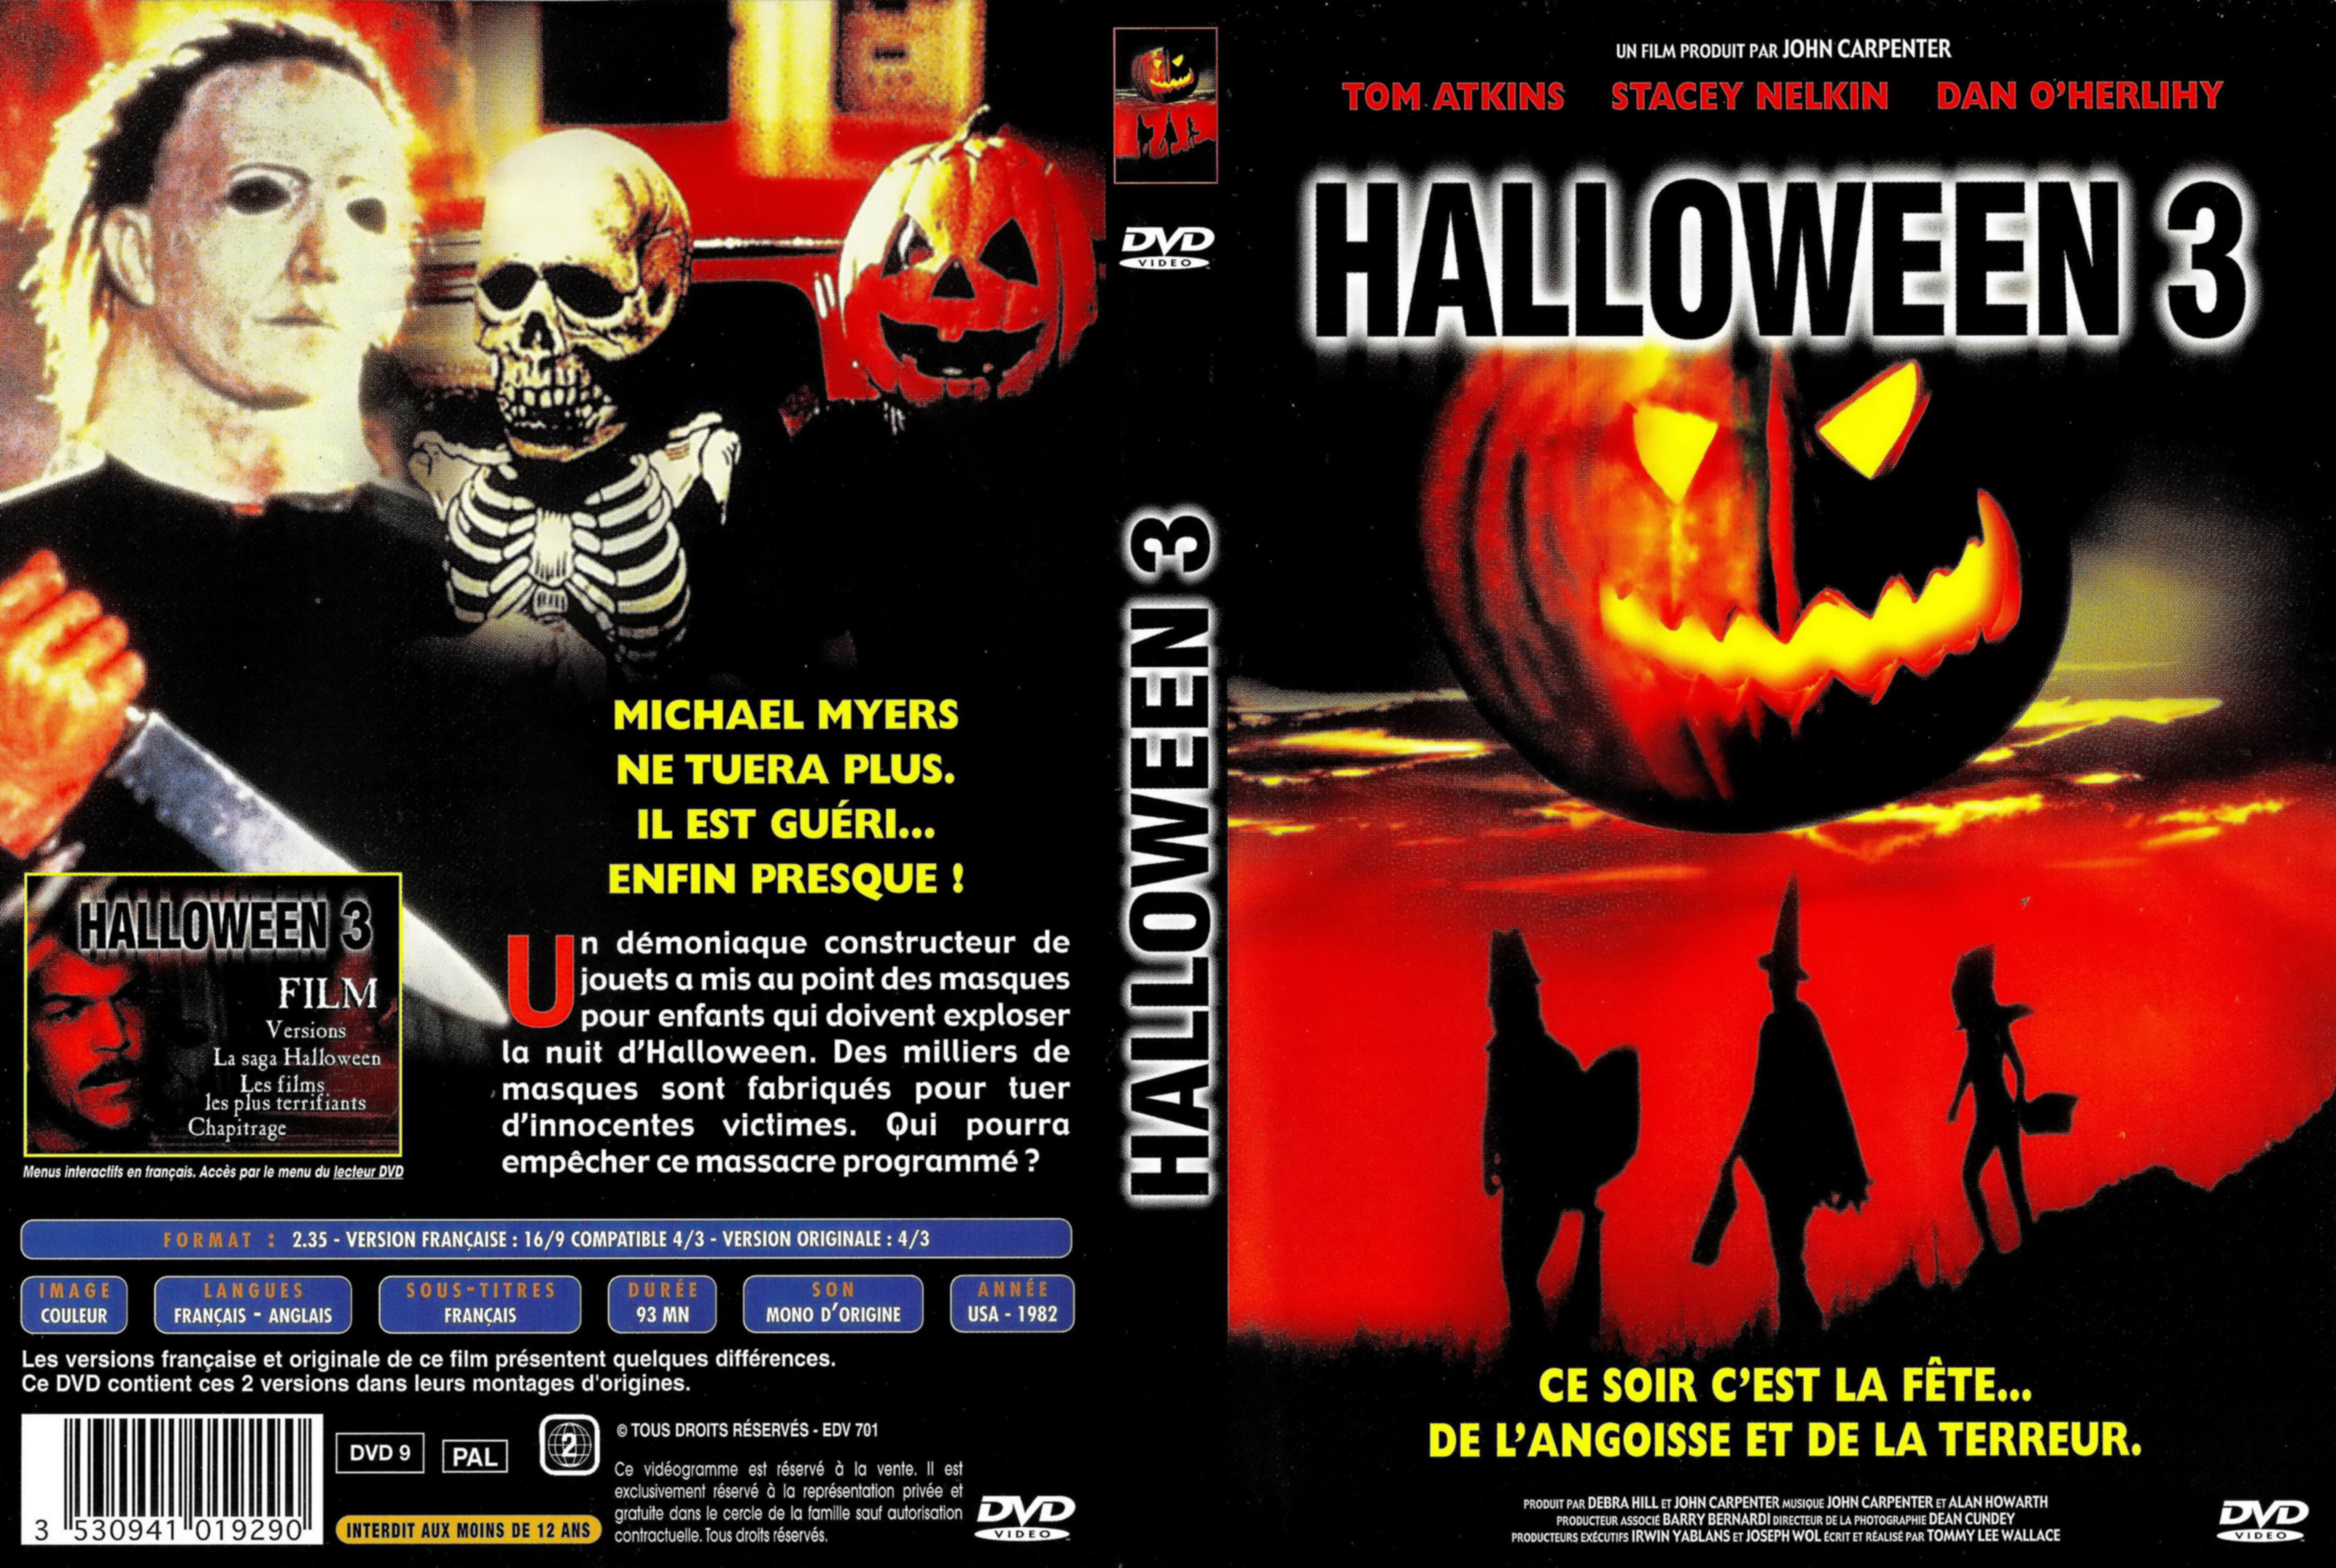 Jaquette DVD Halloween 3 v4